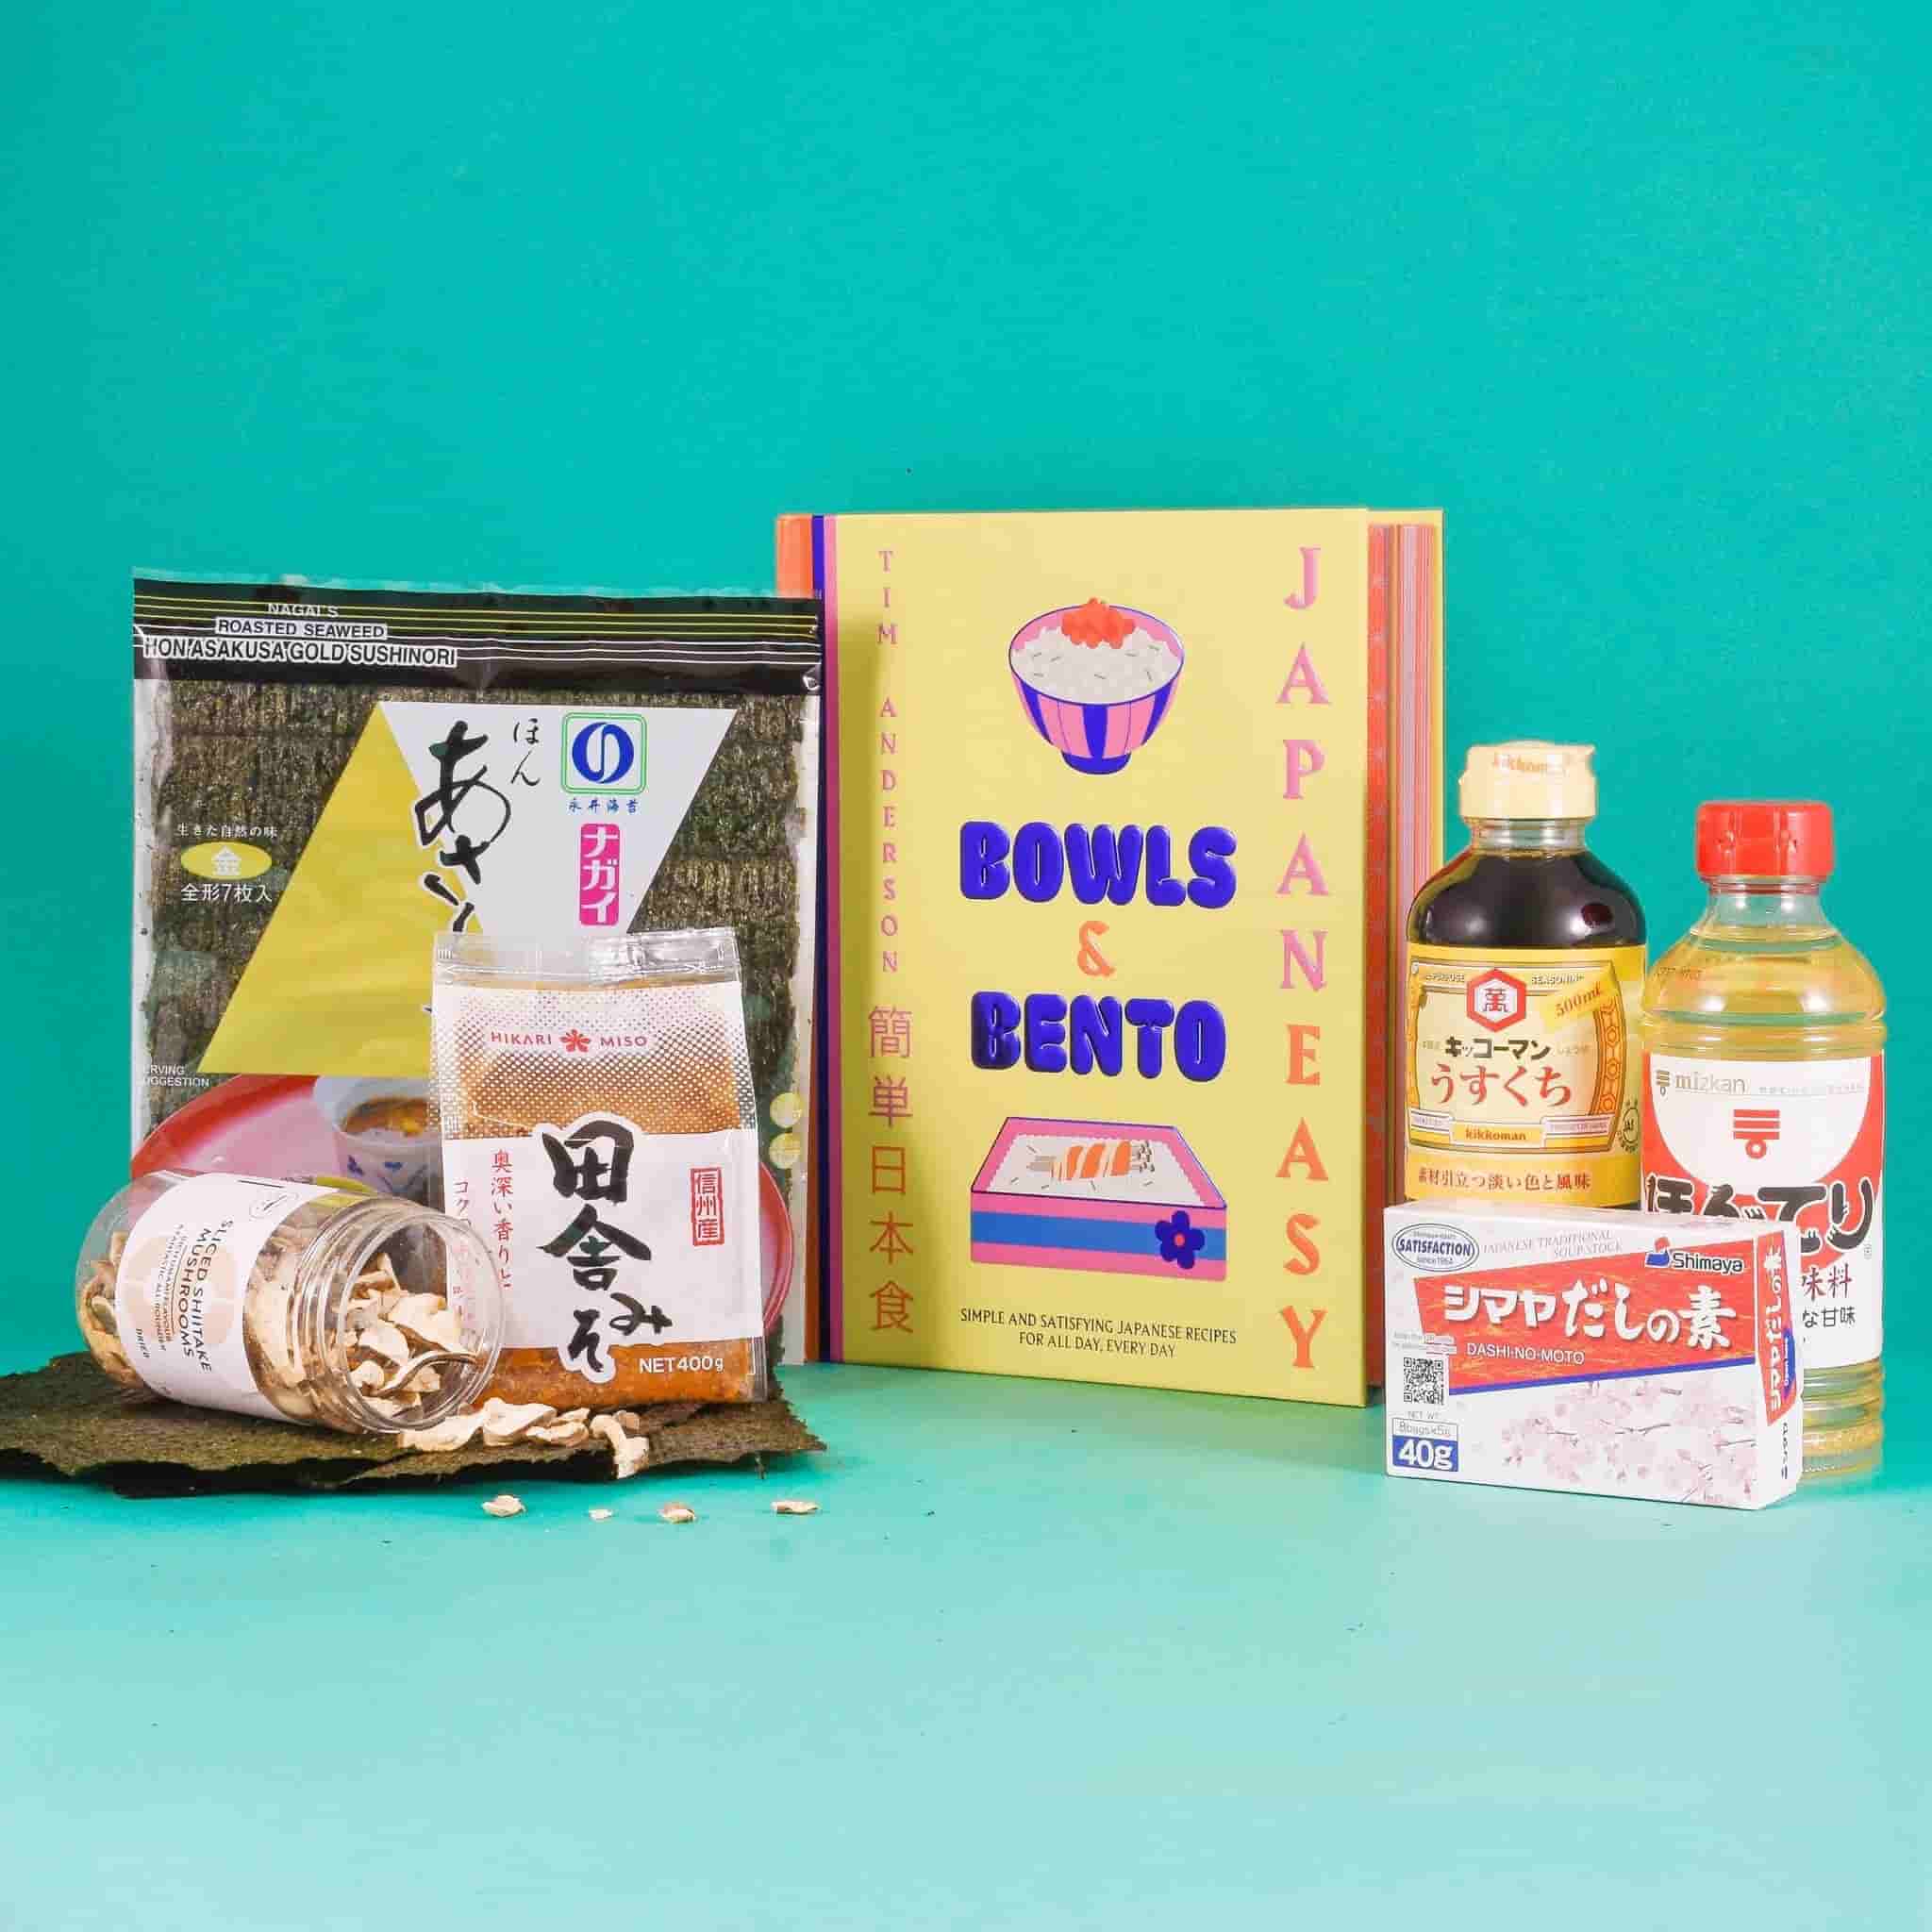 Japan Easy Bowls & Bento Cookbook & Ingredients Set